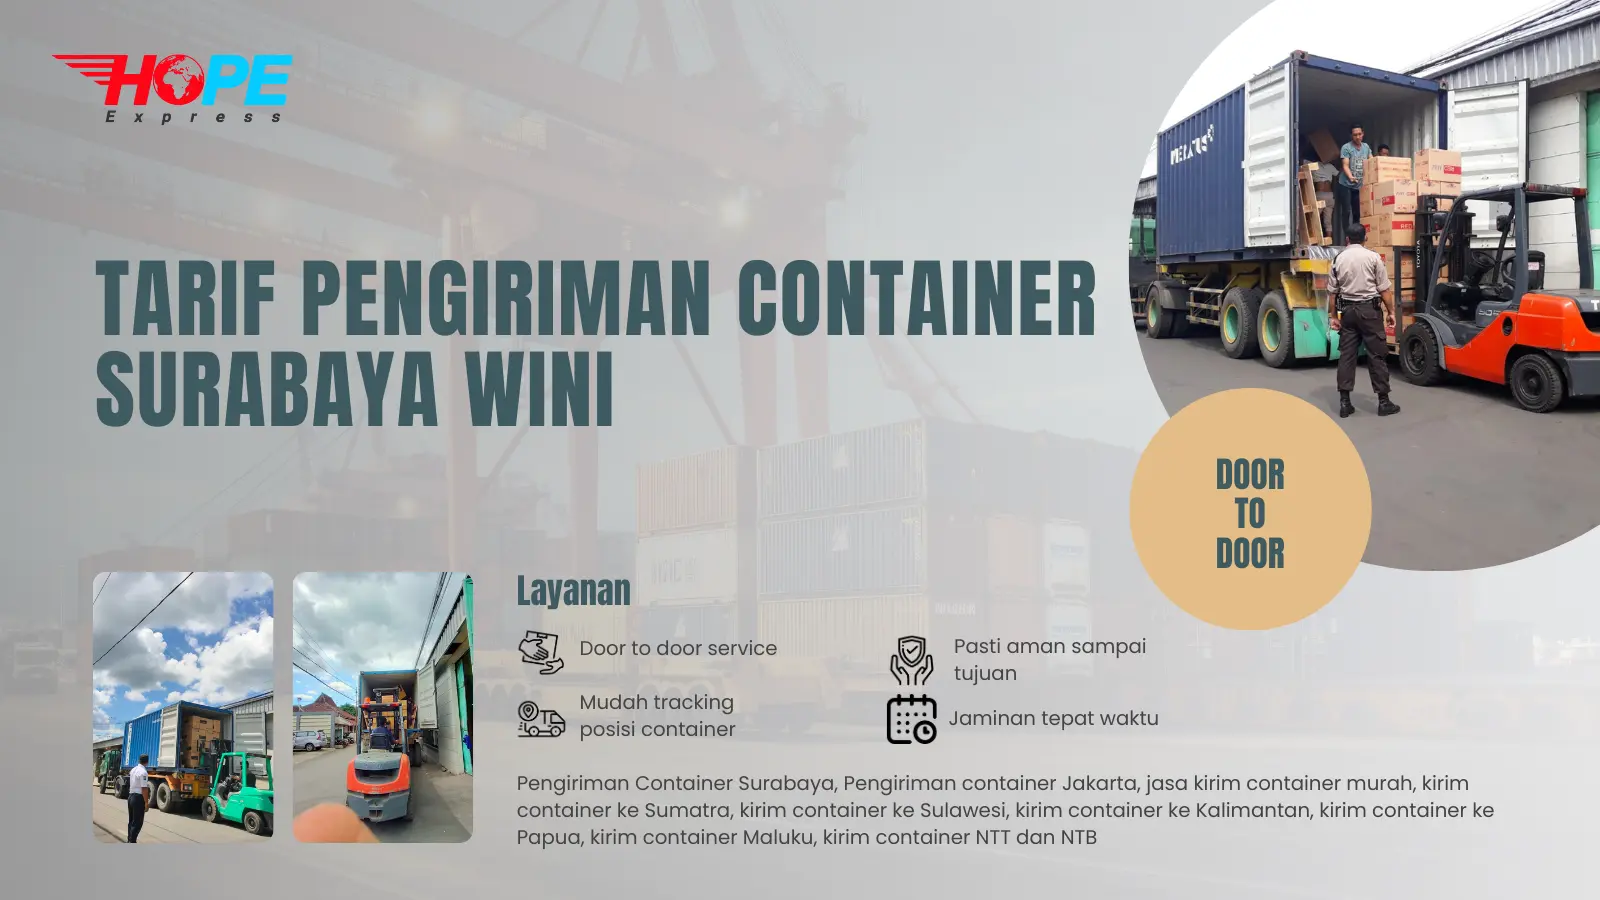 Tarif Pengiriman Container Surabaya Wini